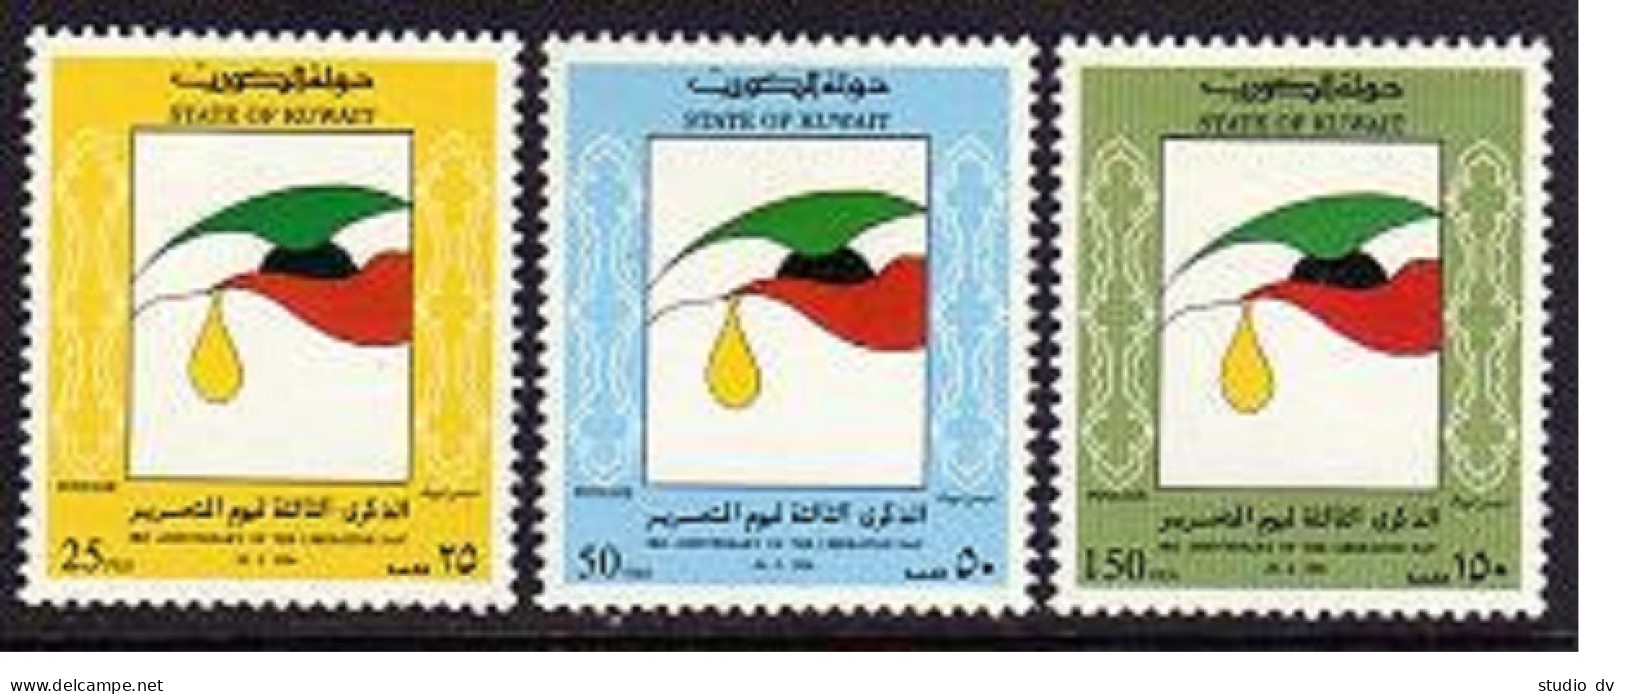 Kuwait 1228-1230, MNH. Michel 1360-1362. Liberation Day,3rd Ann. 1994. - Kuwait